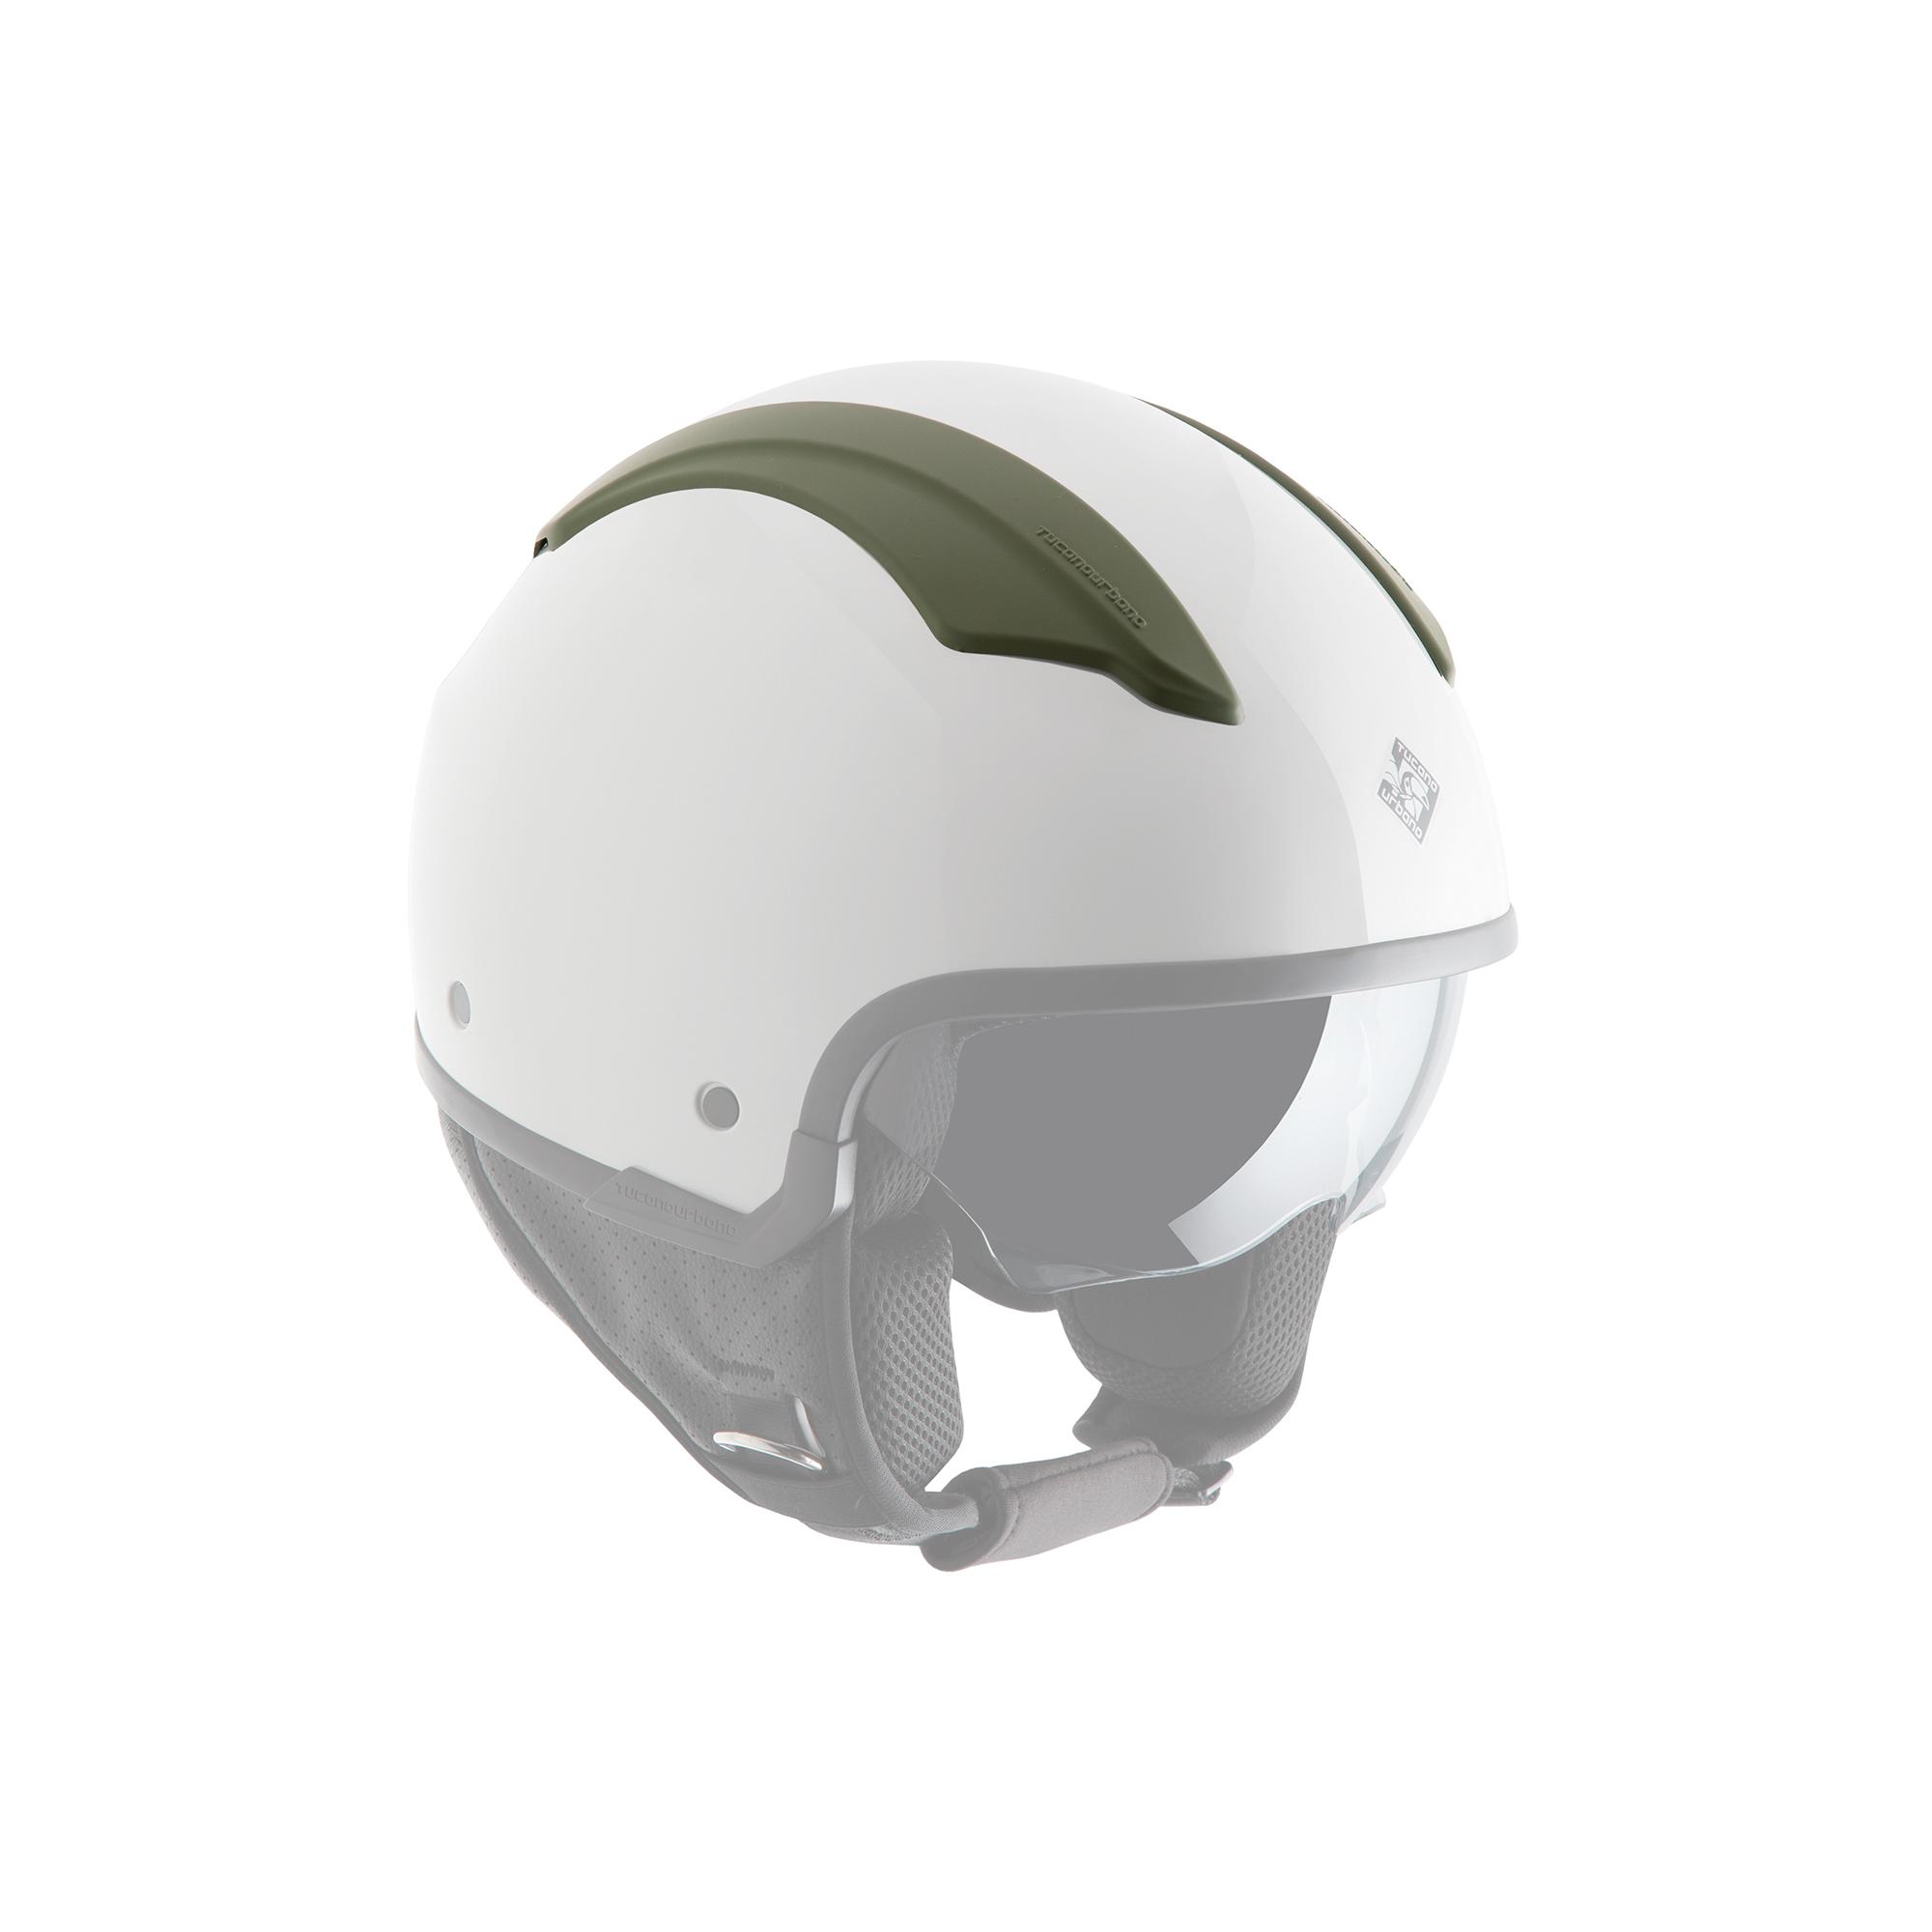 Air–ventilation Covering For El'fresh And El'top Helmets Matte Airborne Green 